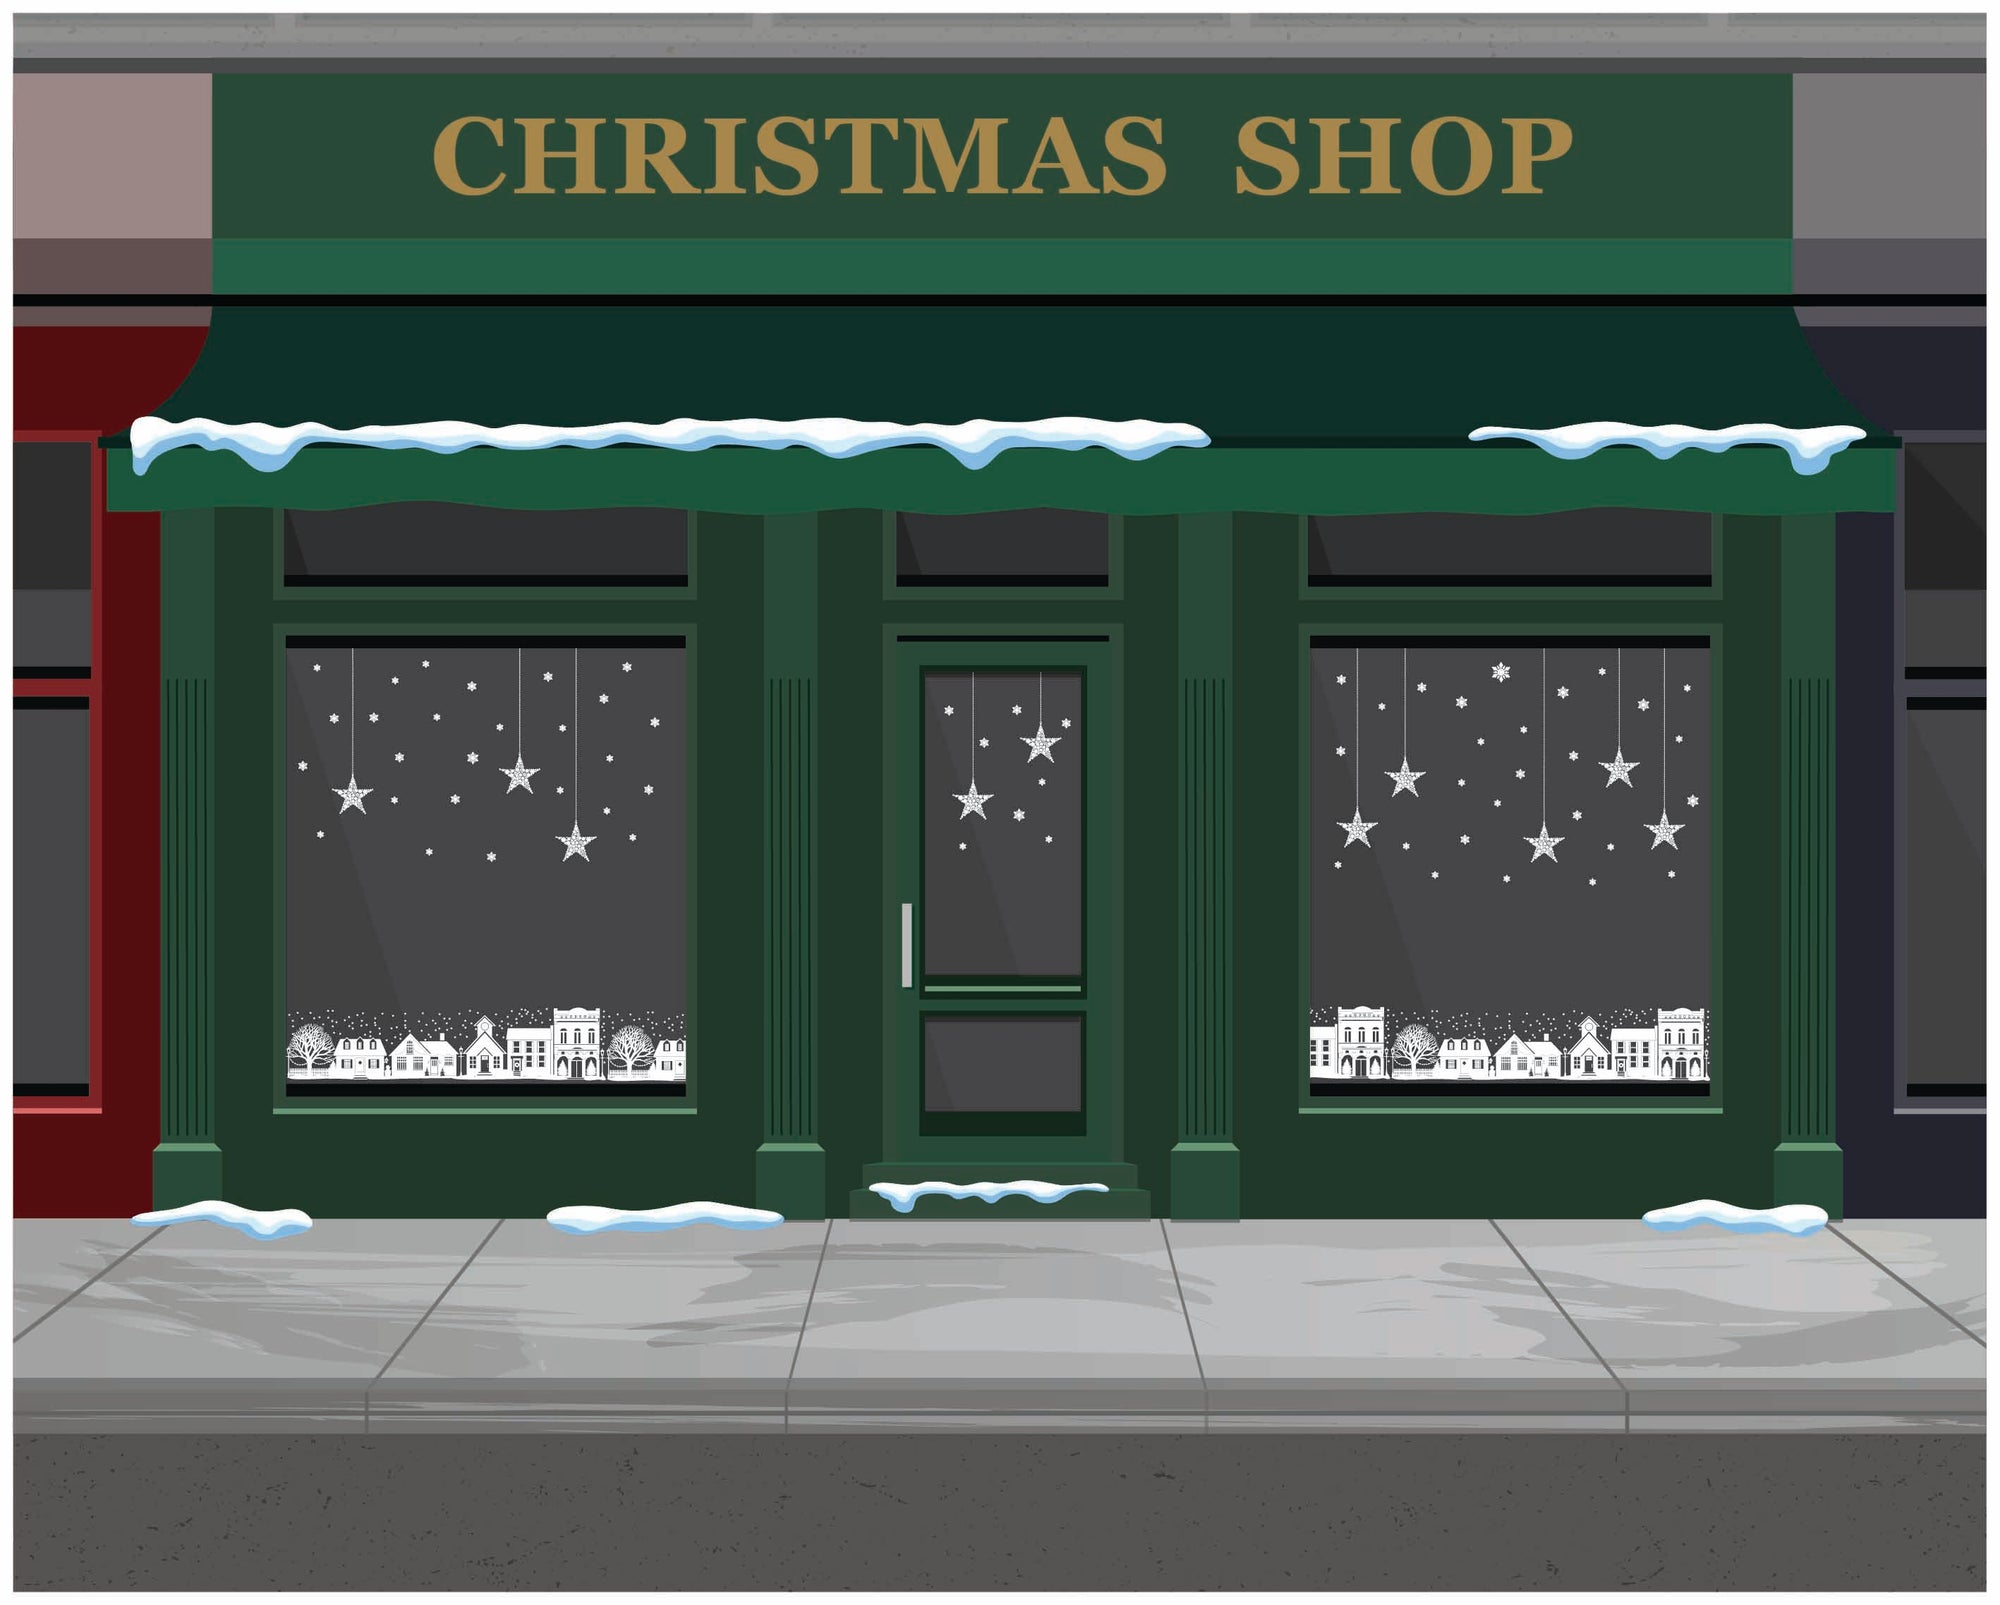 Starry night Christmas window idea for shop window displays